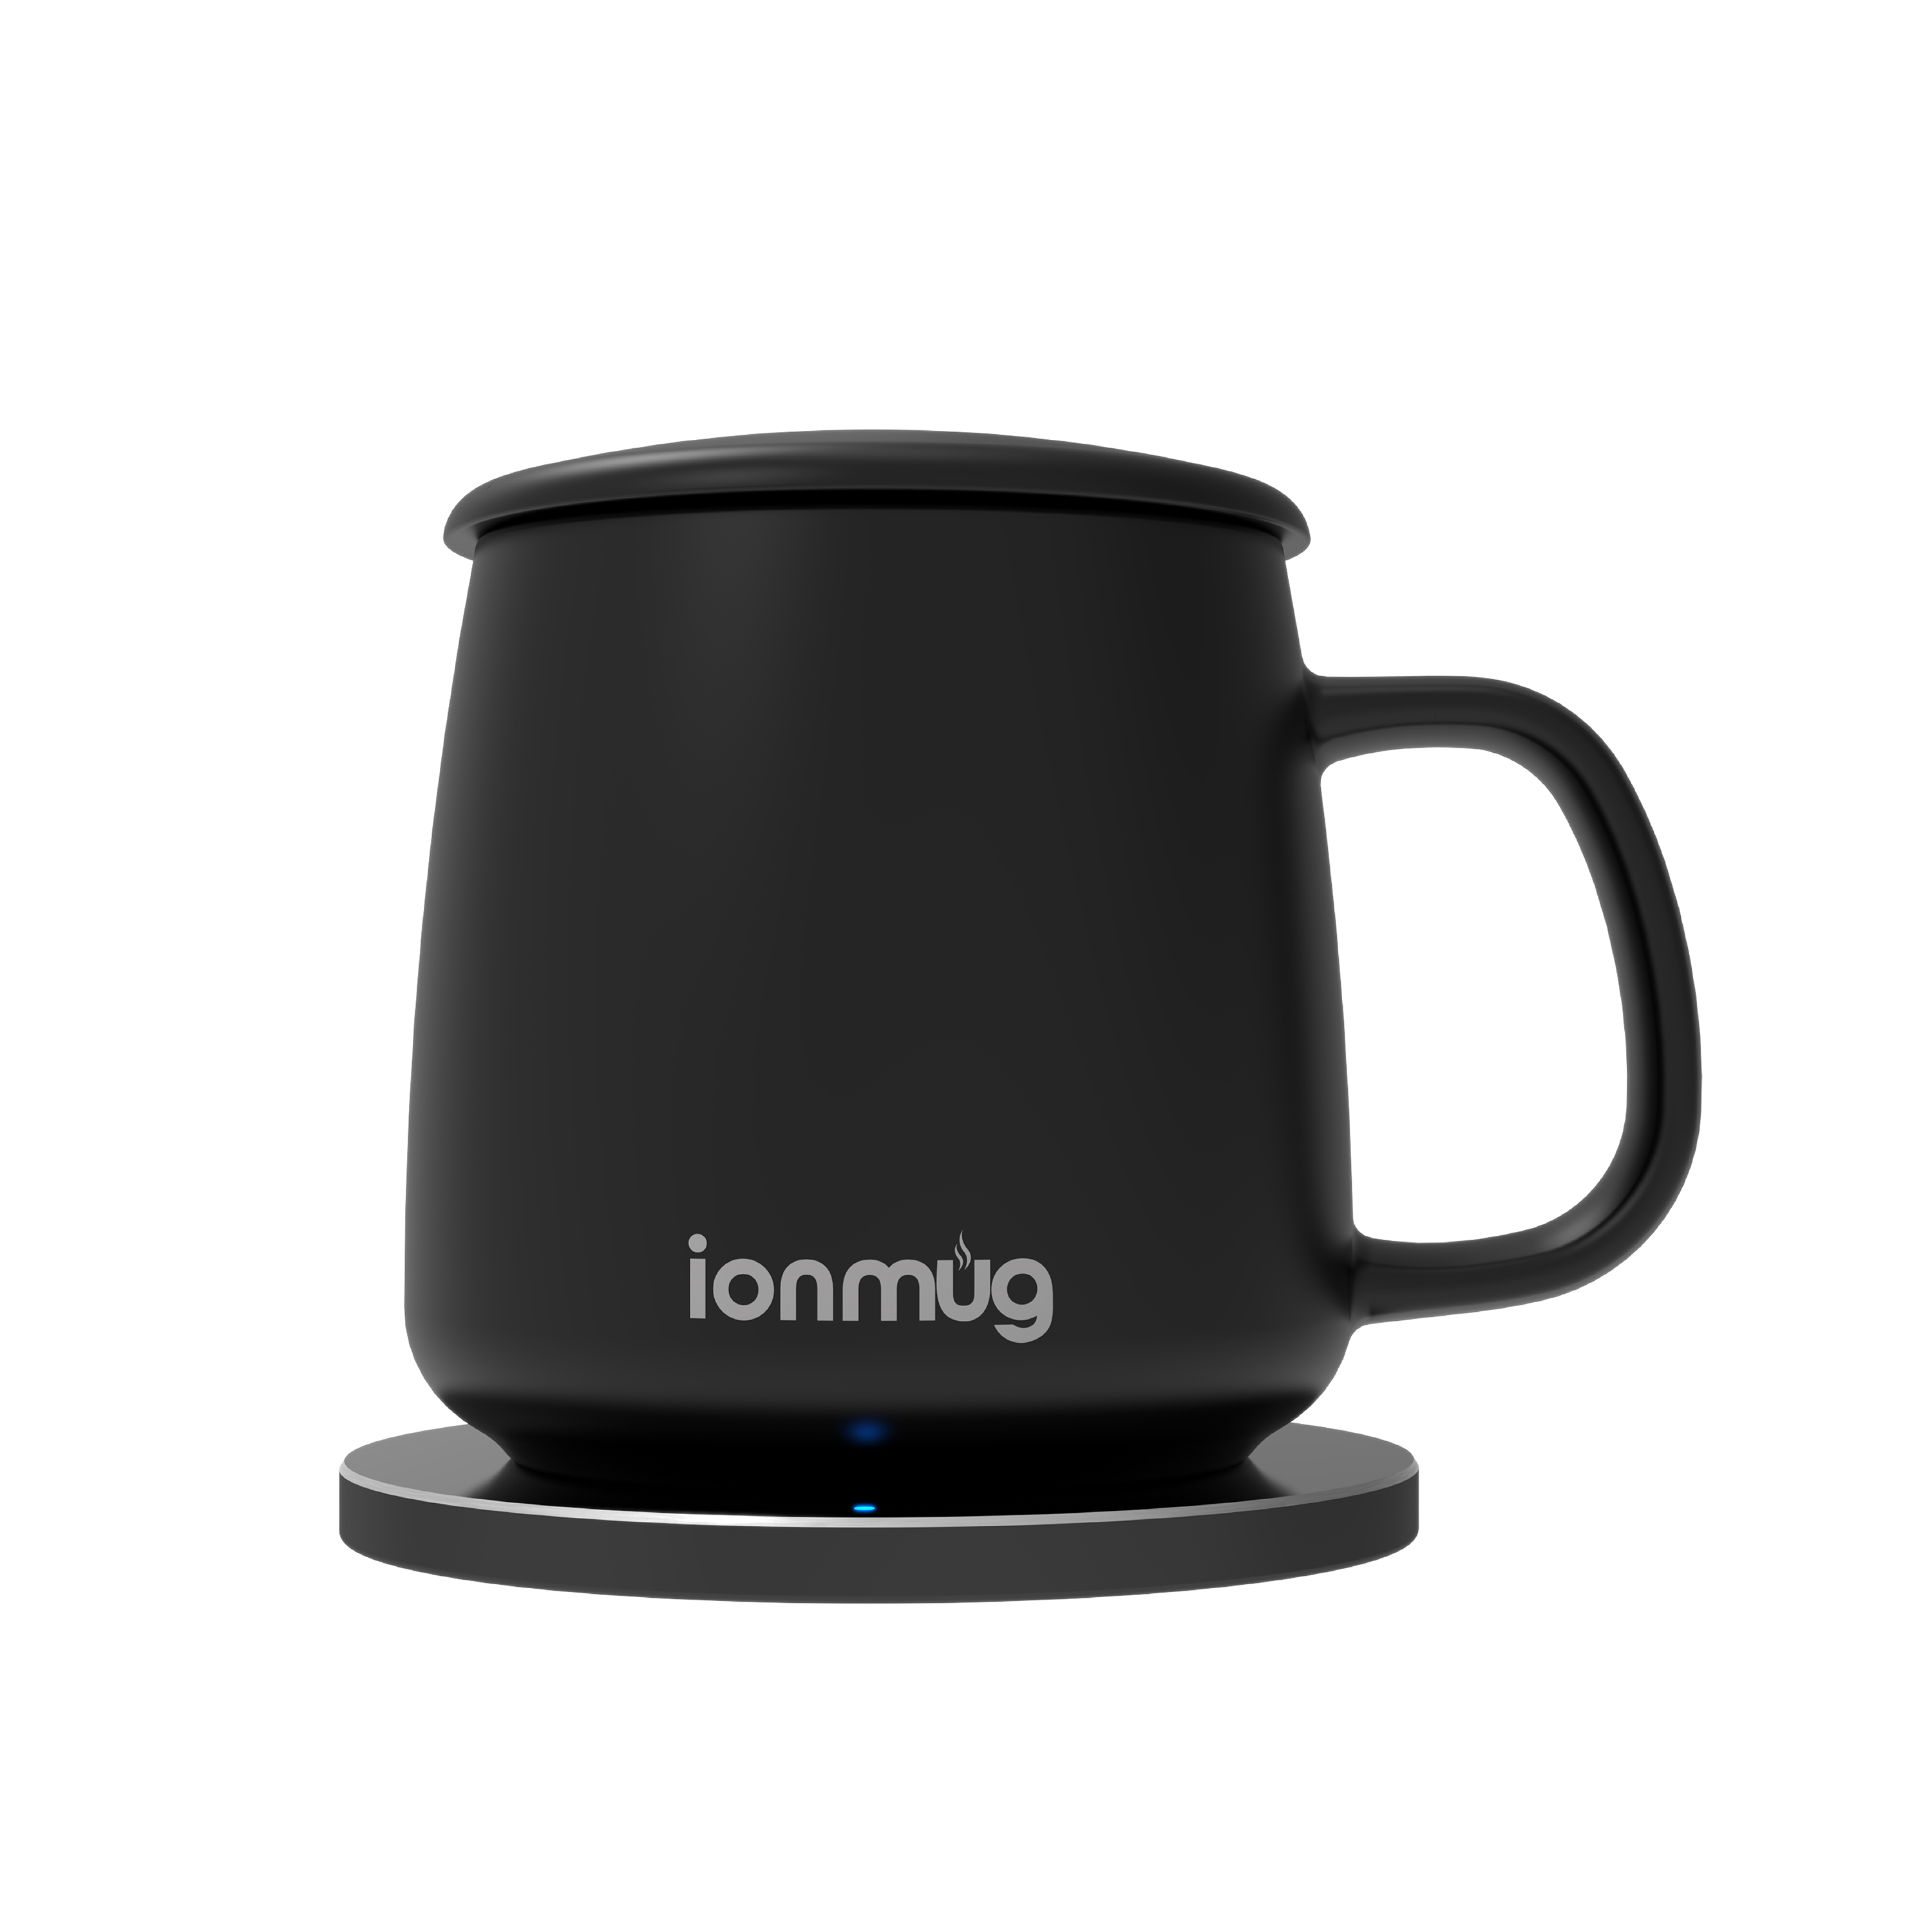 ionMug and Charging Coaster – 12.8oz Heated Ceramic Coffee Mug with Wireless Charging Coaster - image 1 of 11